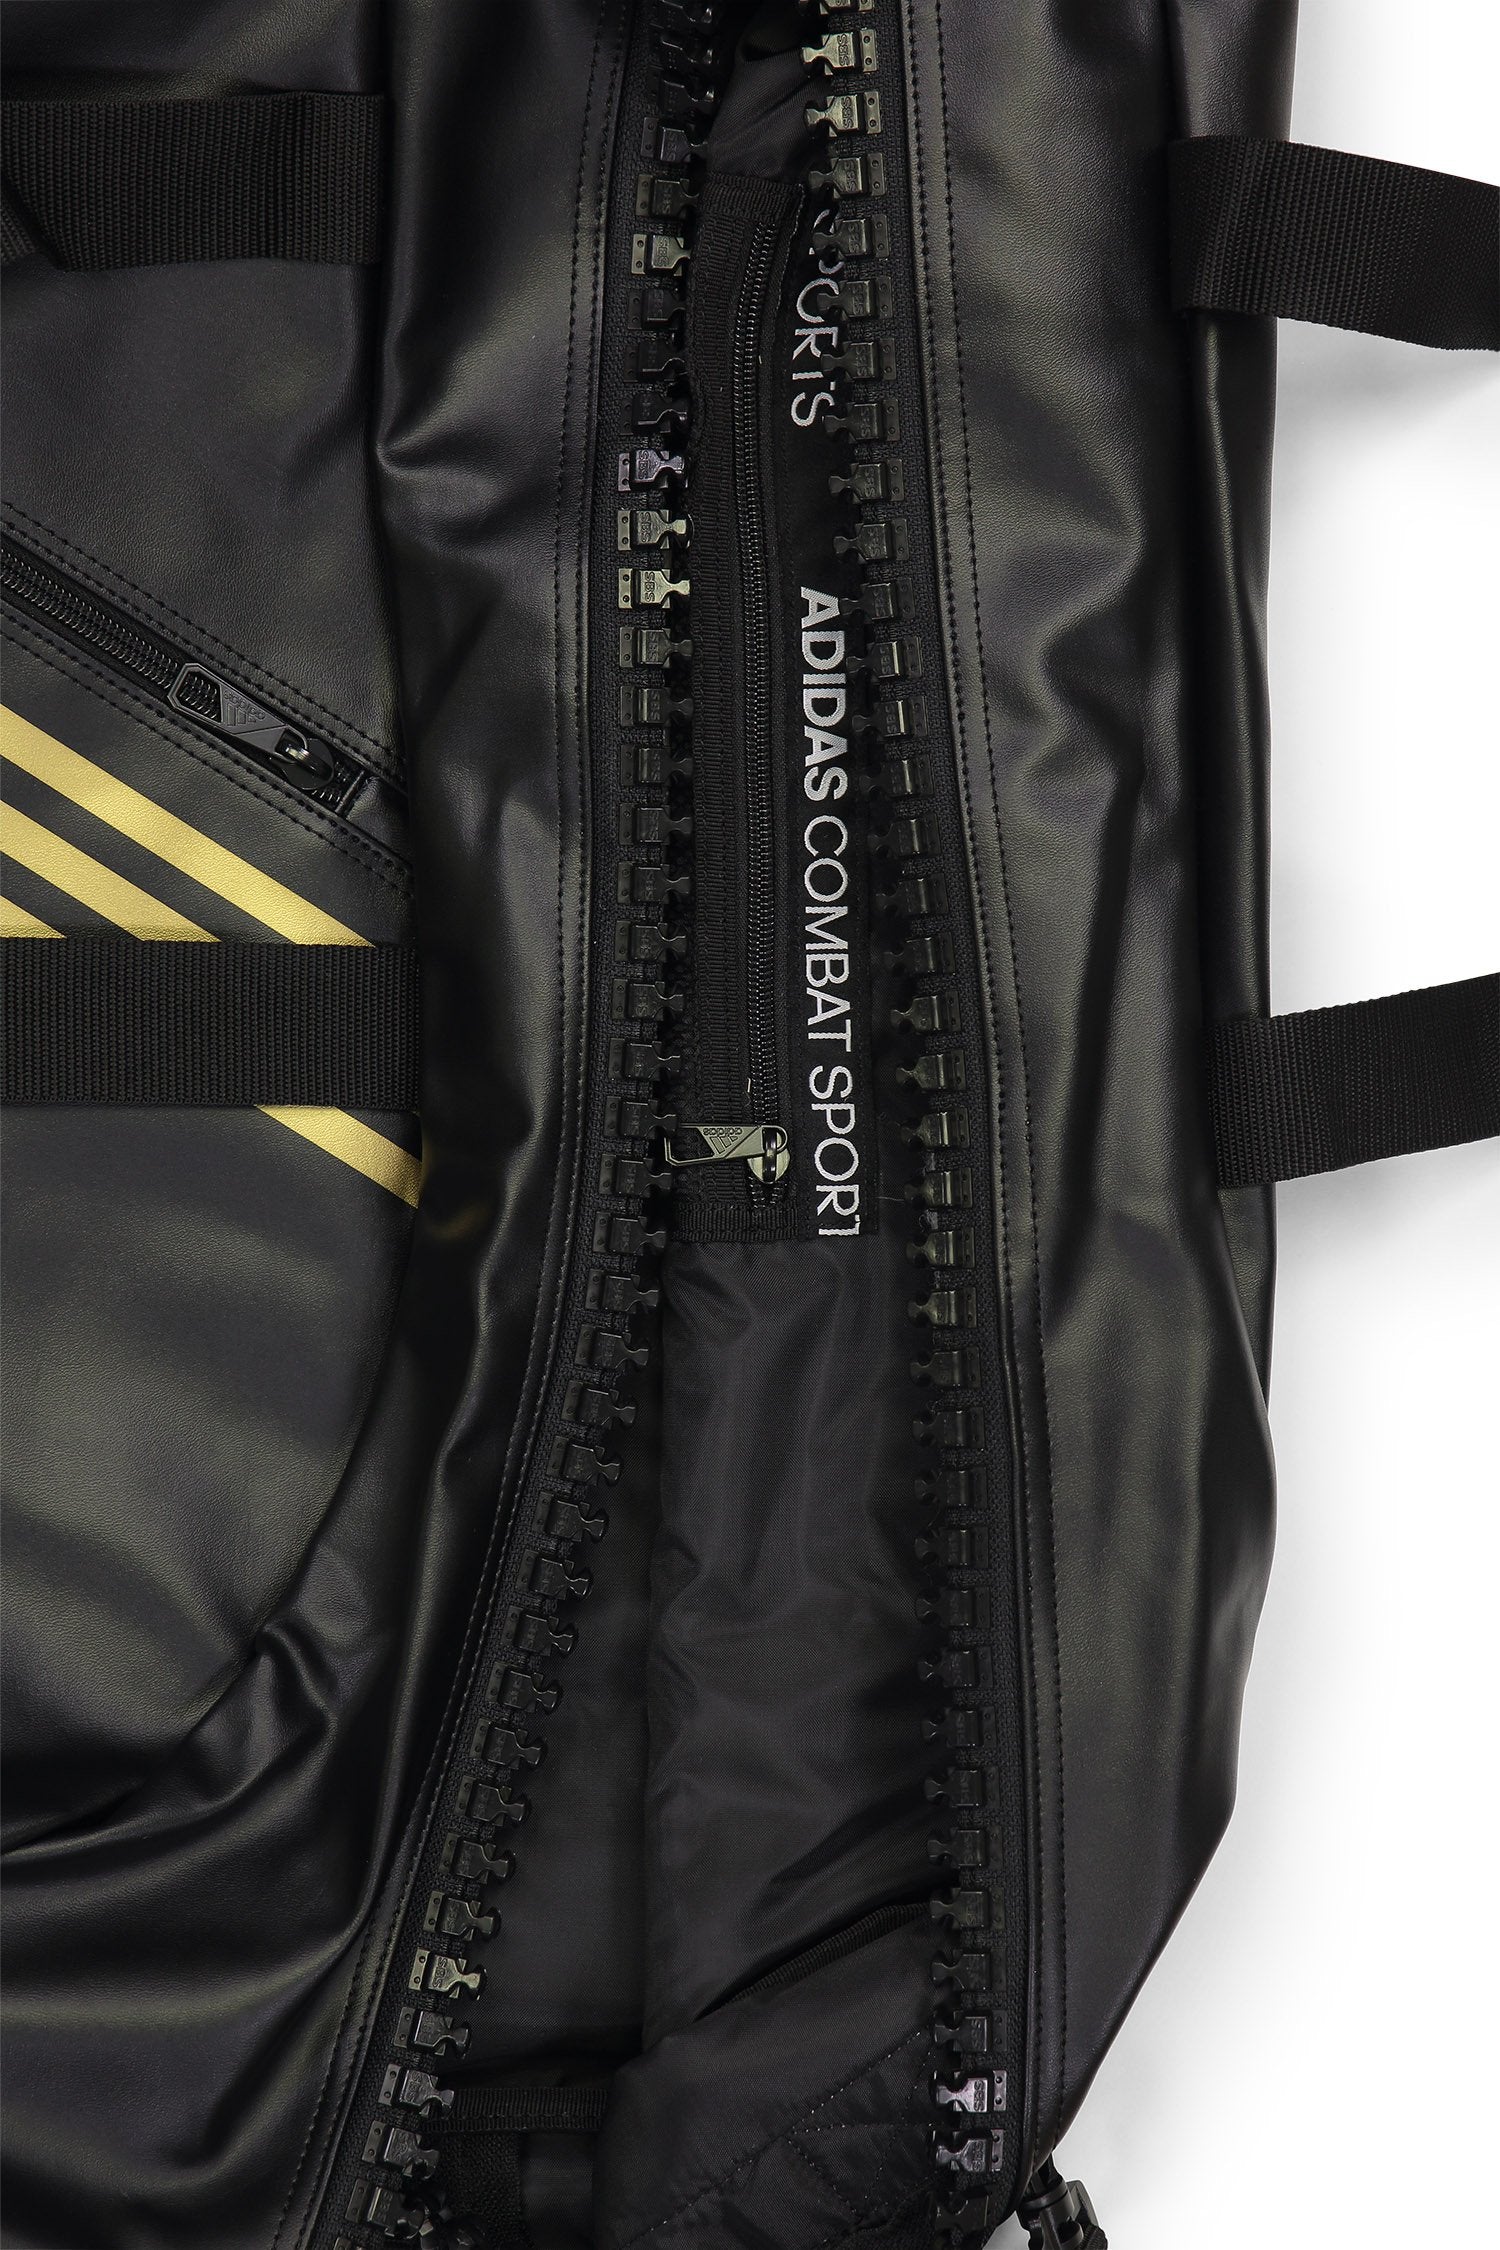 Adidas Bags WBC/Adidas Gym & Travel Bag